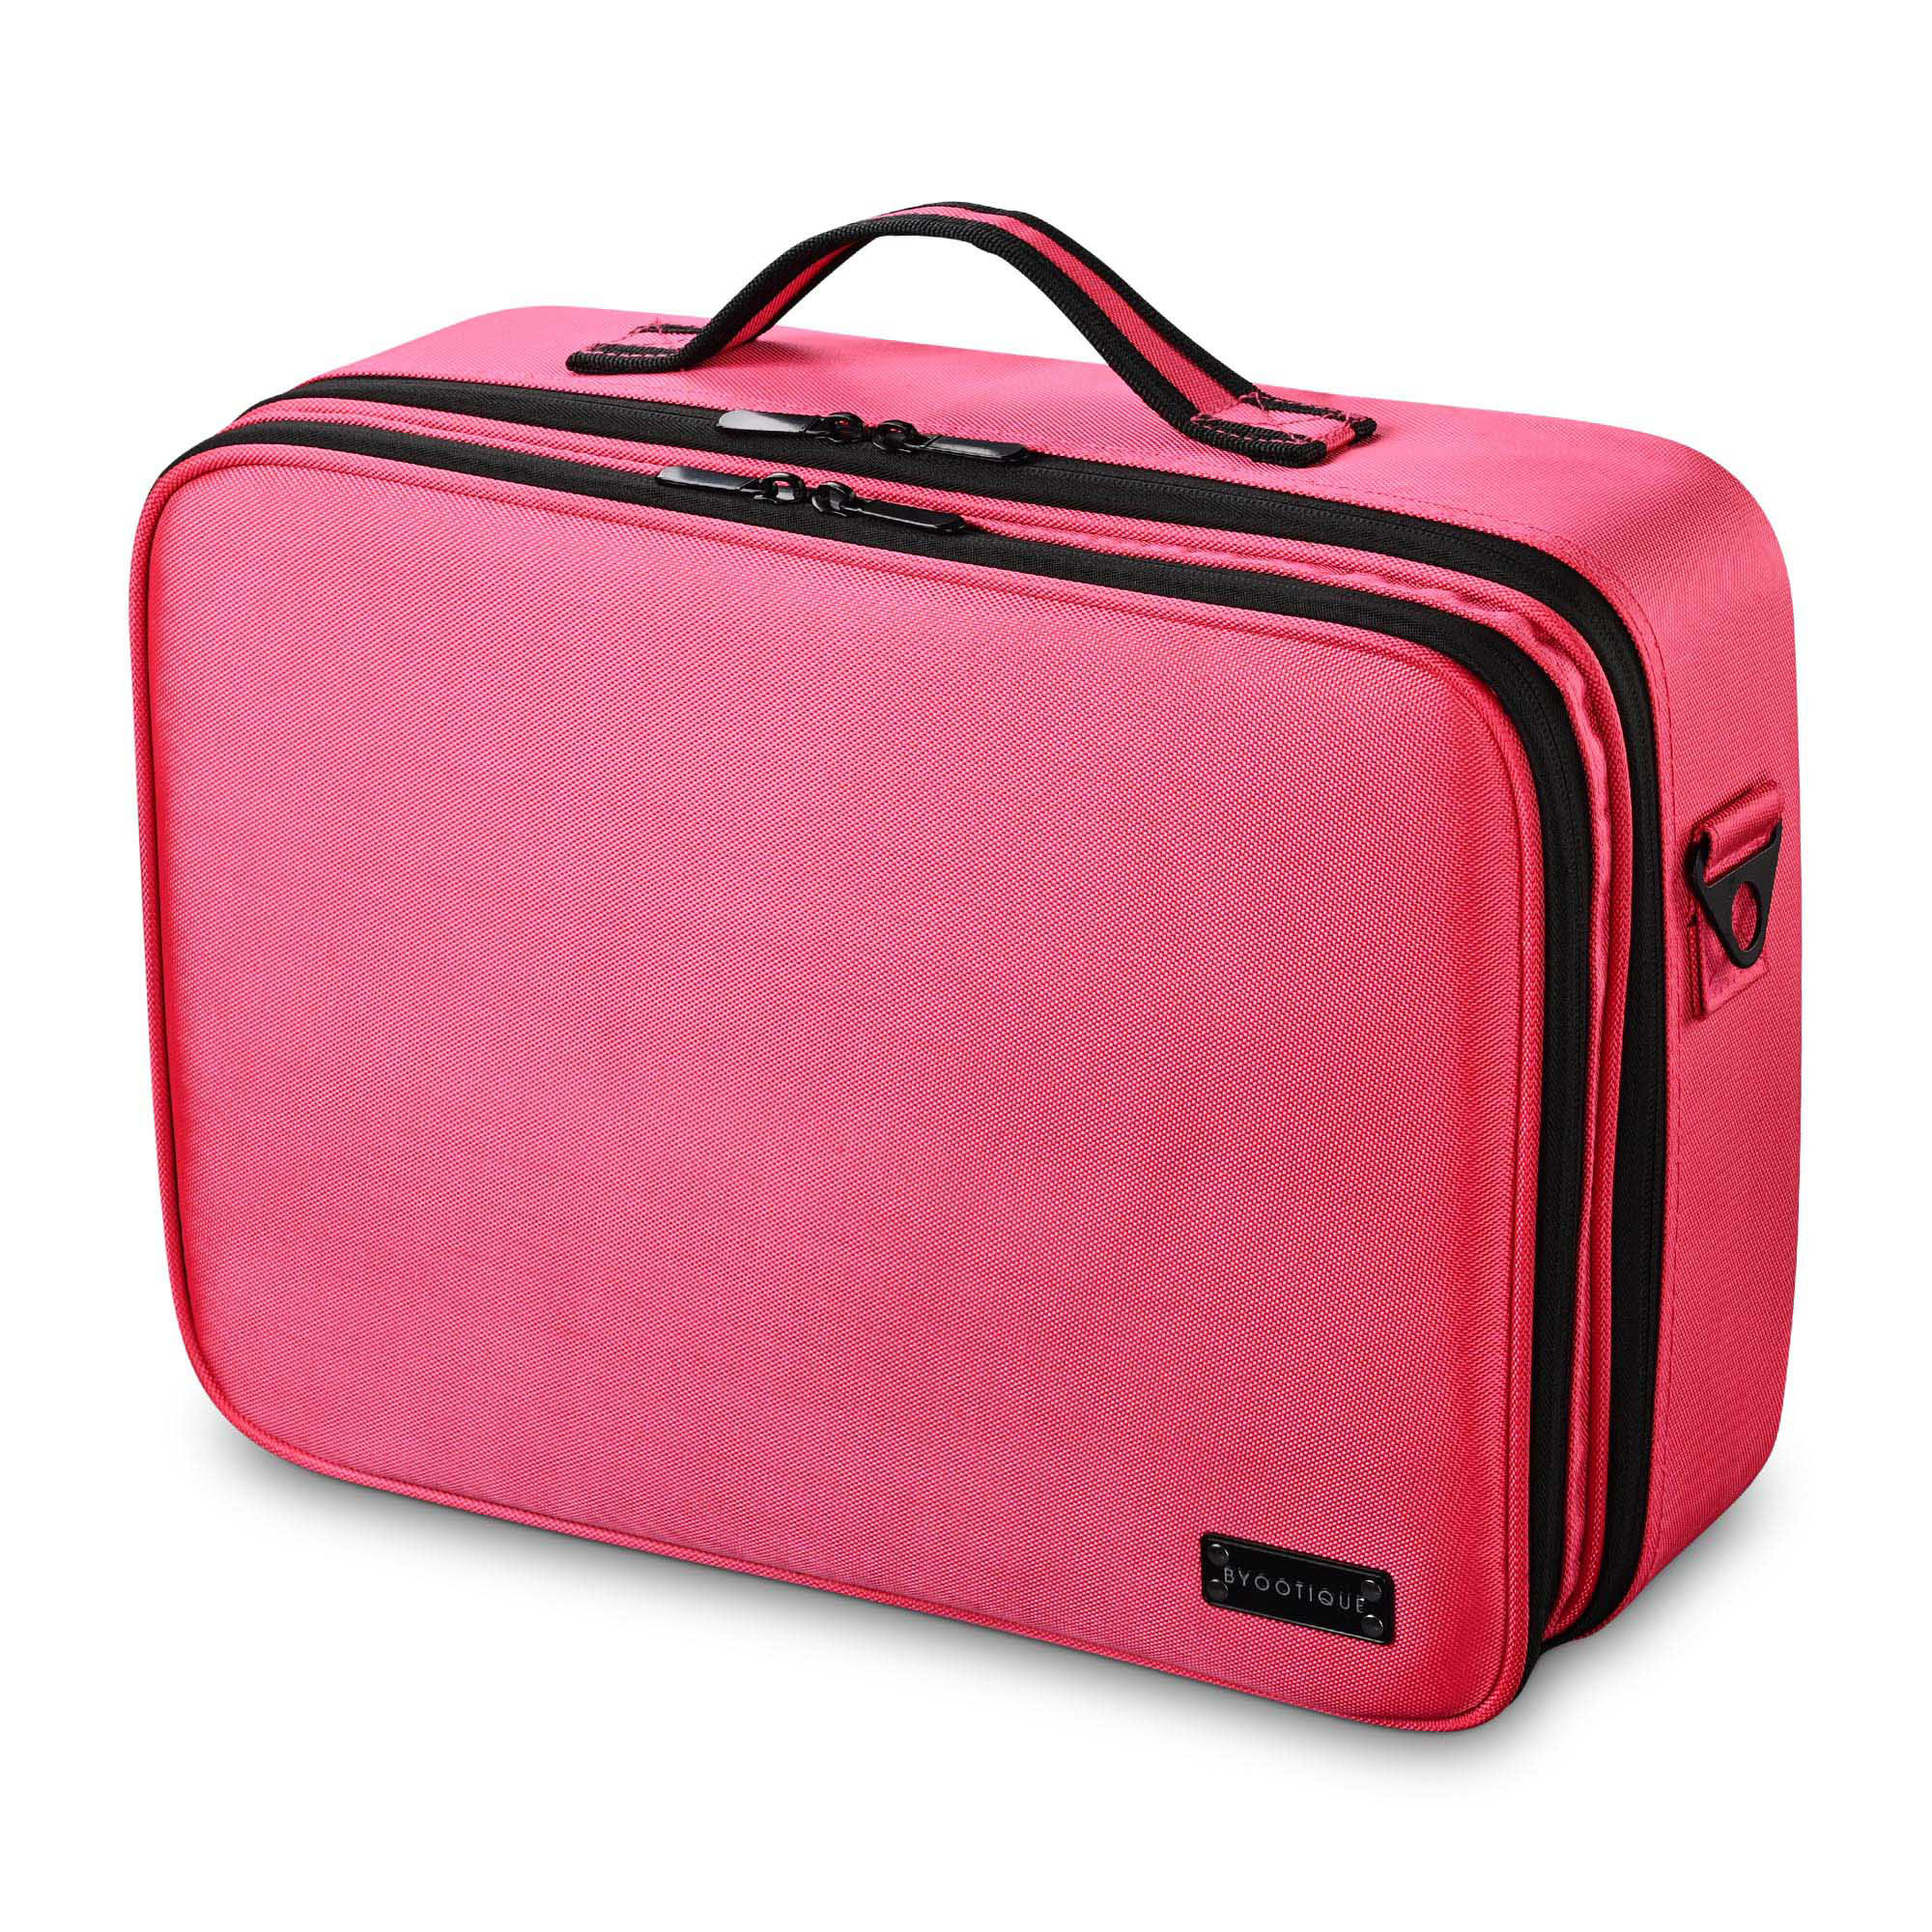 Byootique 10 Travel Makeup Bag Cosmetic Case Storage Organizer Travel  Brush Holder, Hot Pink